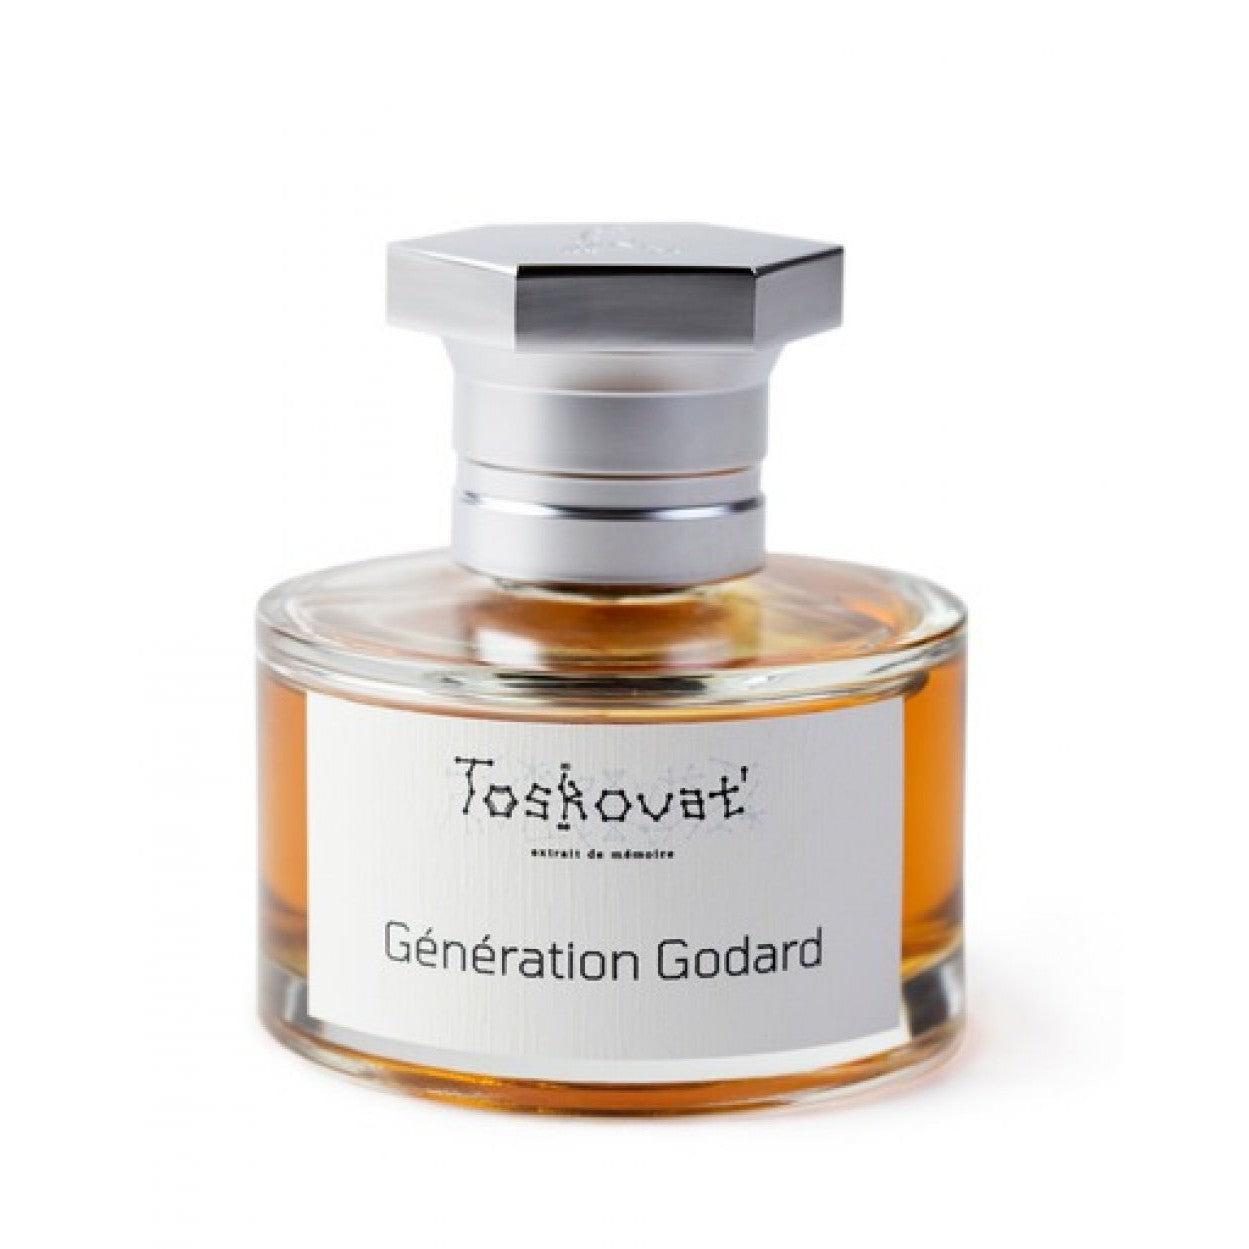 Toskovat` Génération Godard, 60 ml, Extract De Parfum-